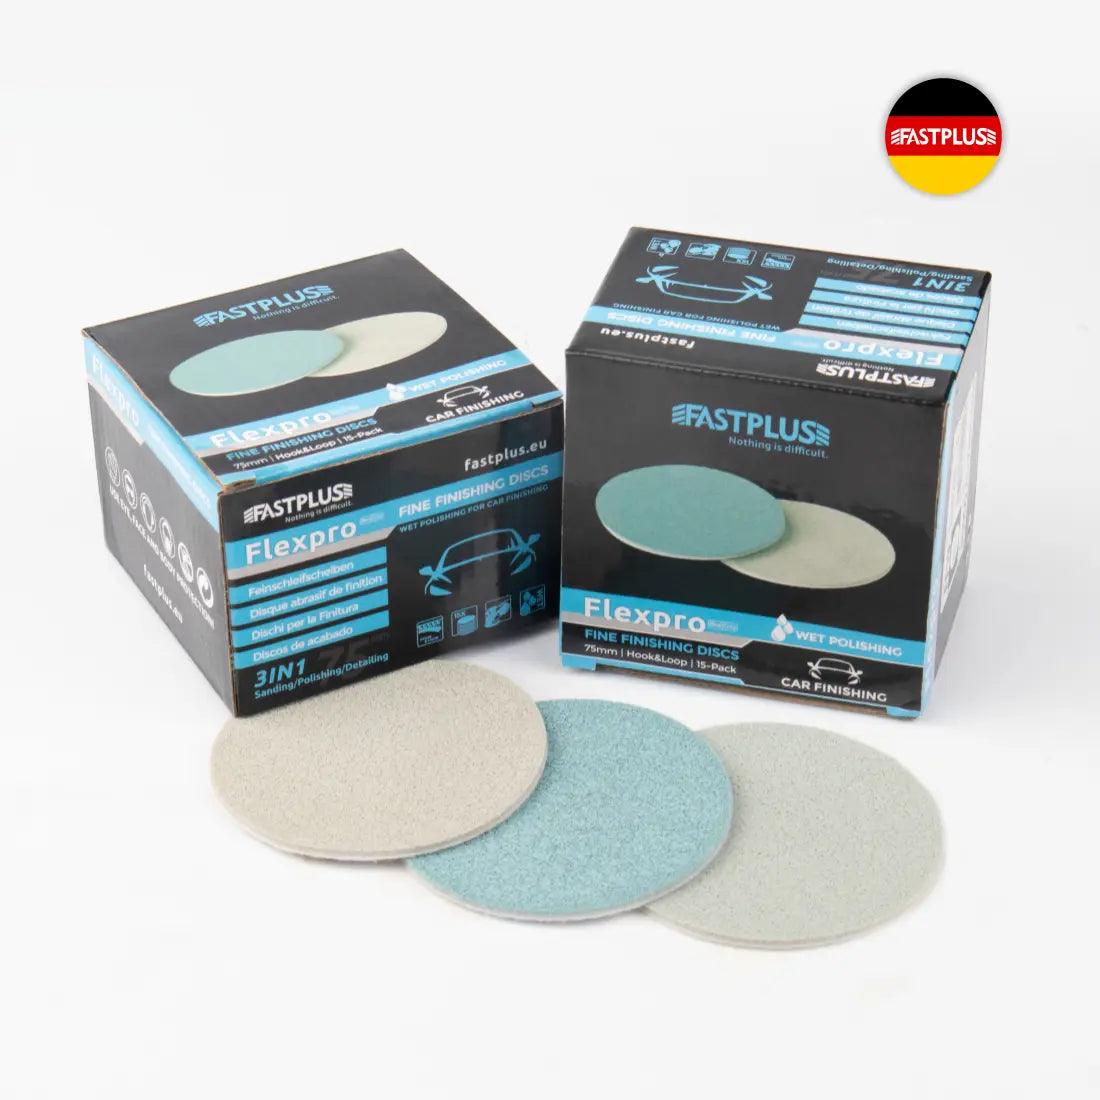 75mm FLEXPRO fine finishing foam discs trizact for clearcoat scratches sanding Schaumstoff feinschleifscheiben Disques de finition fine